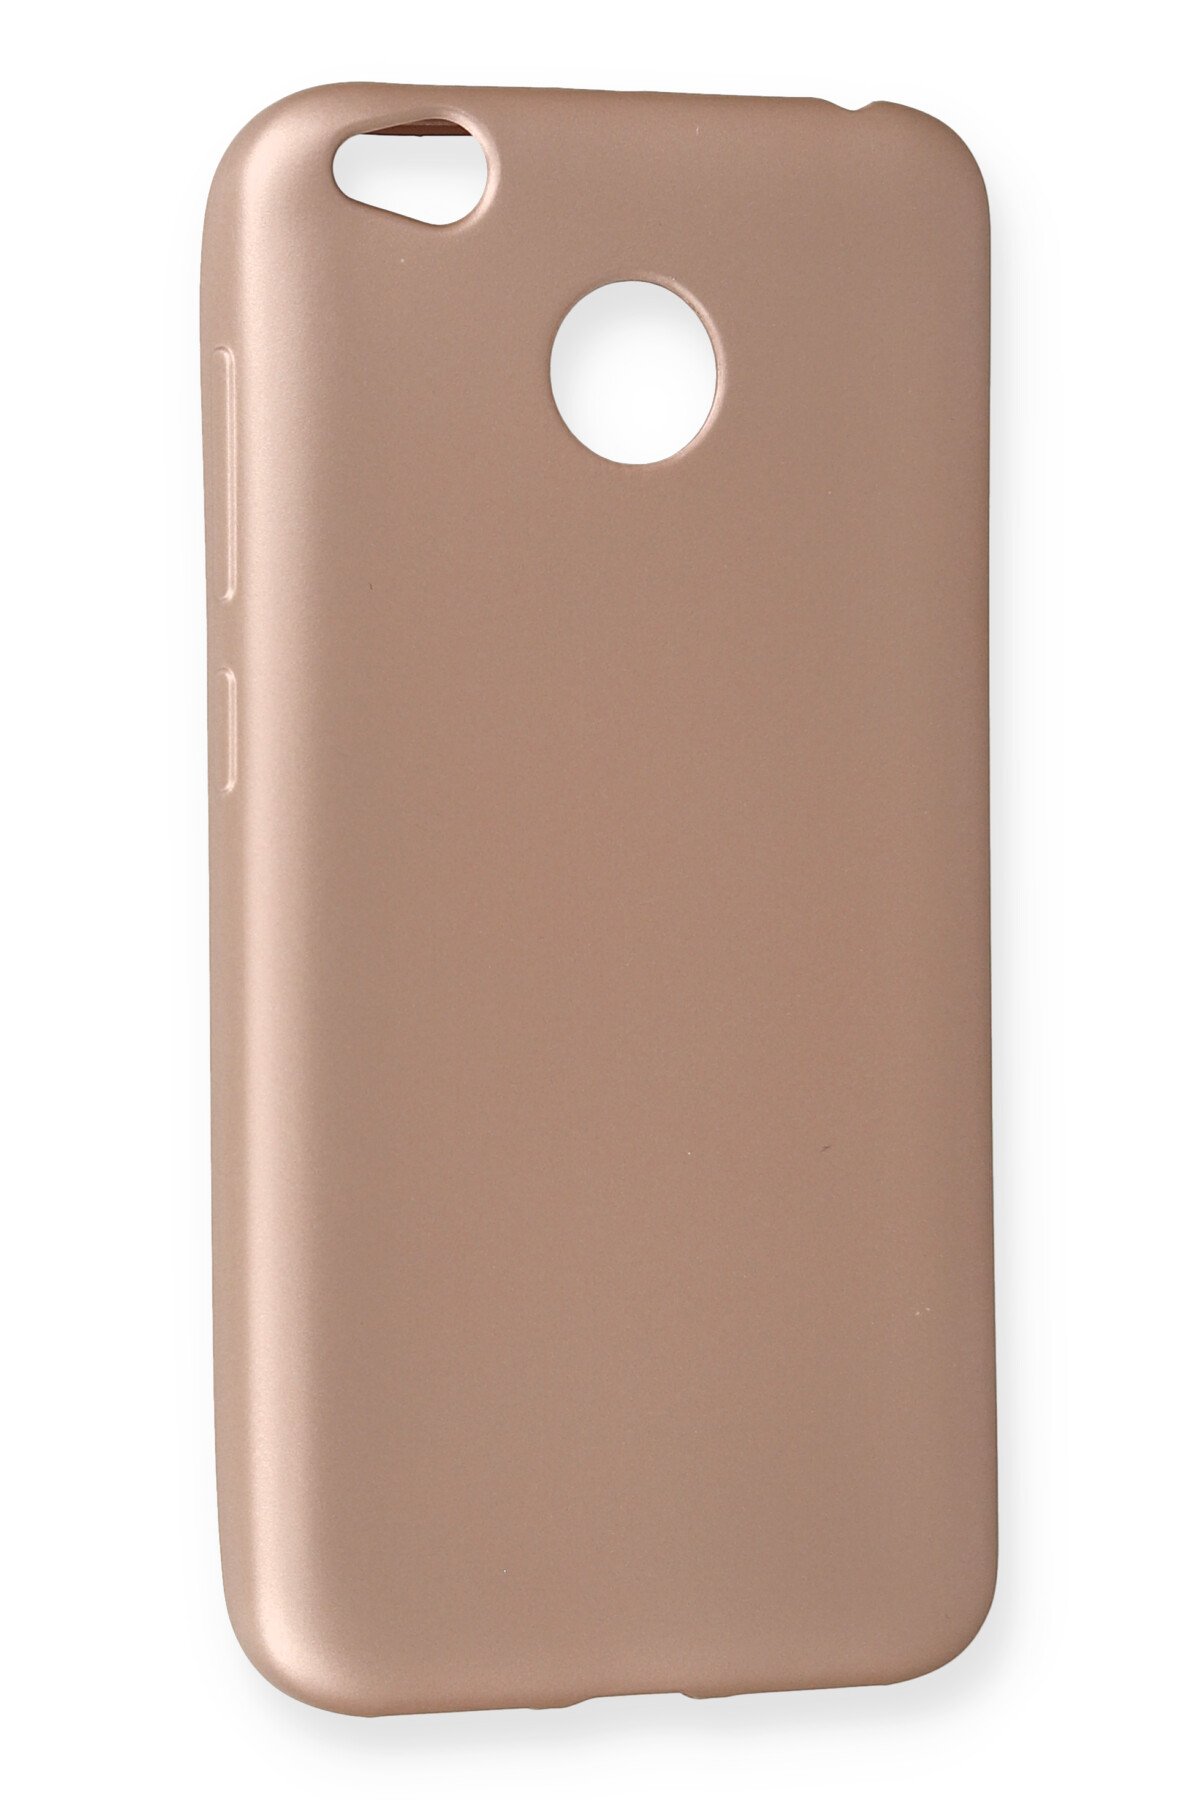 NewFace Newface Xiaomi Redmi 4X Kılıf Premium Rubber Silikon - Rose Gold